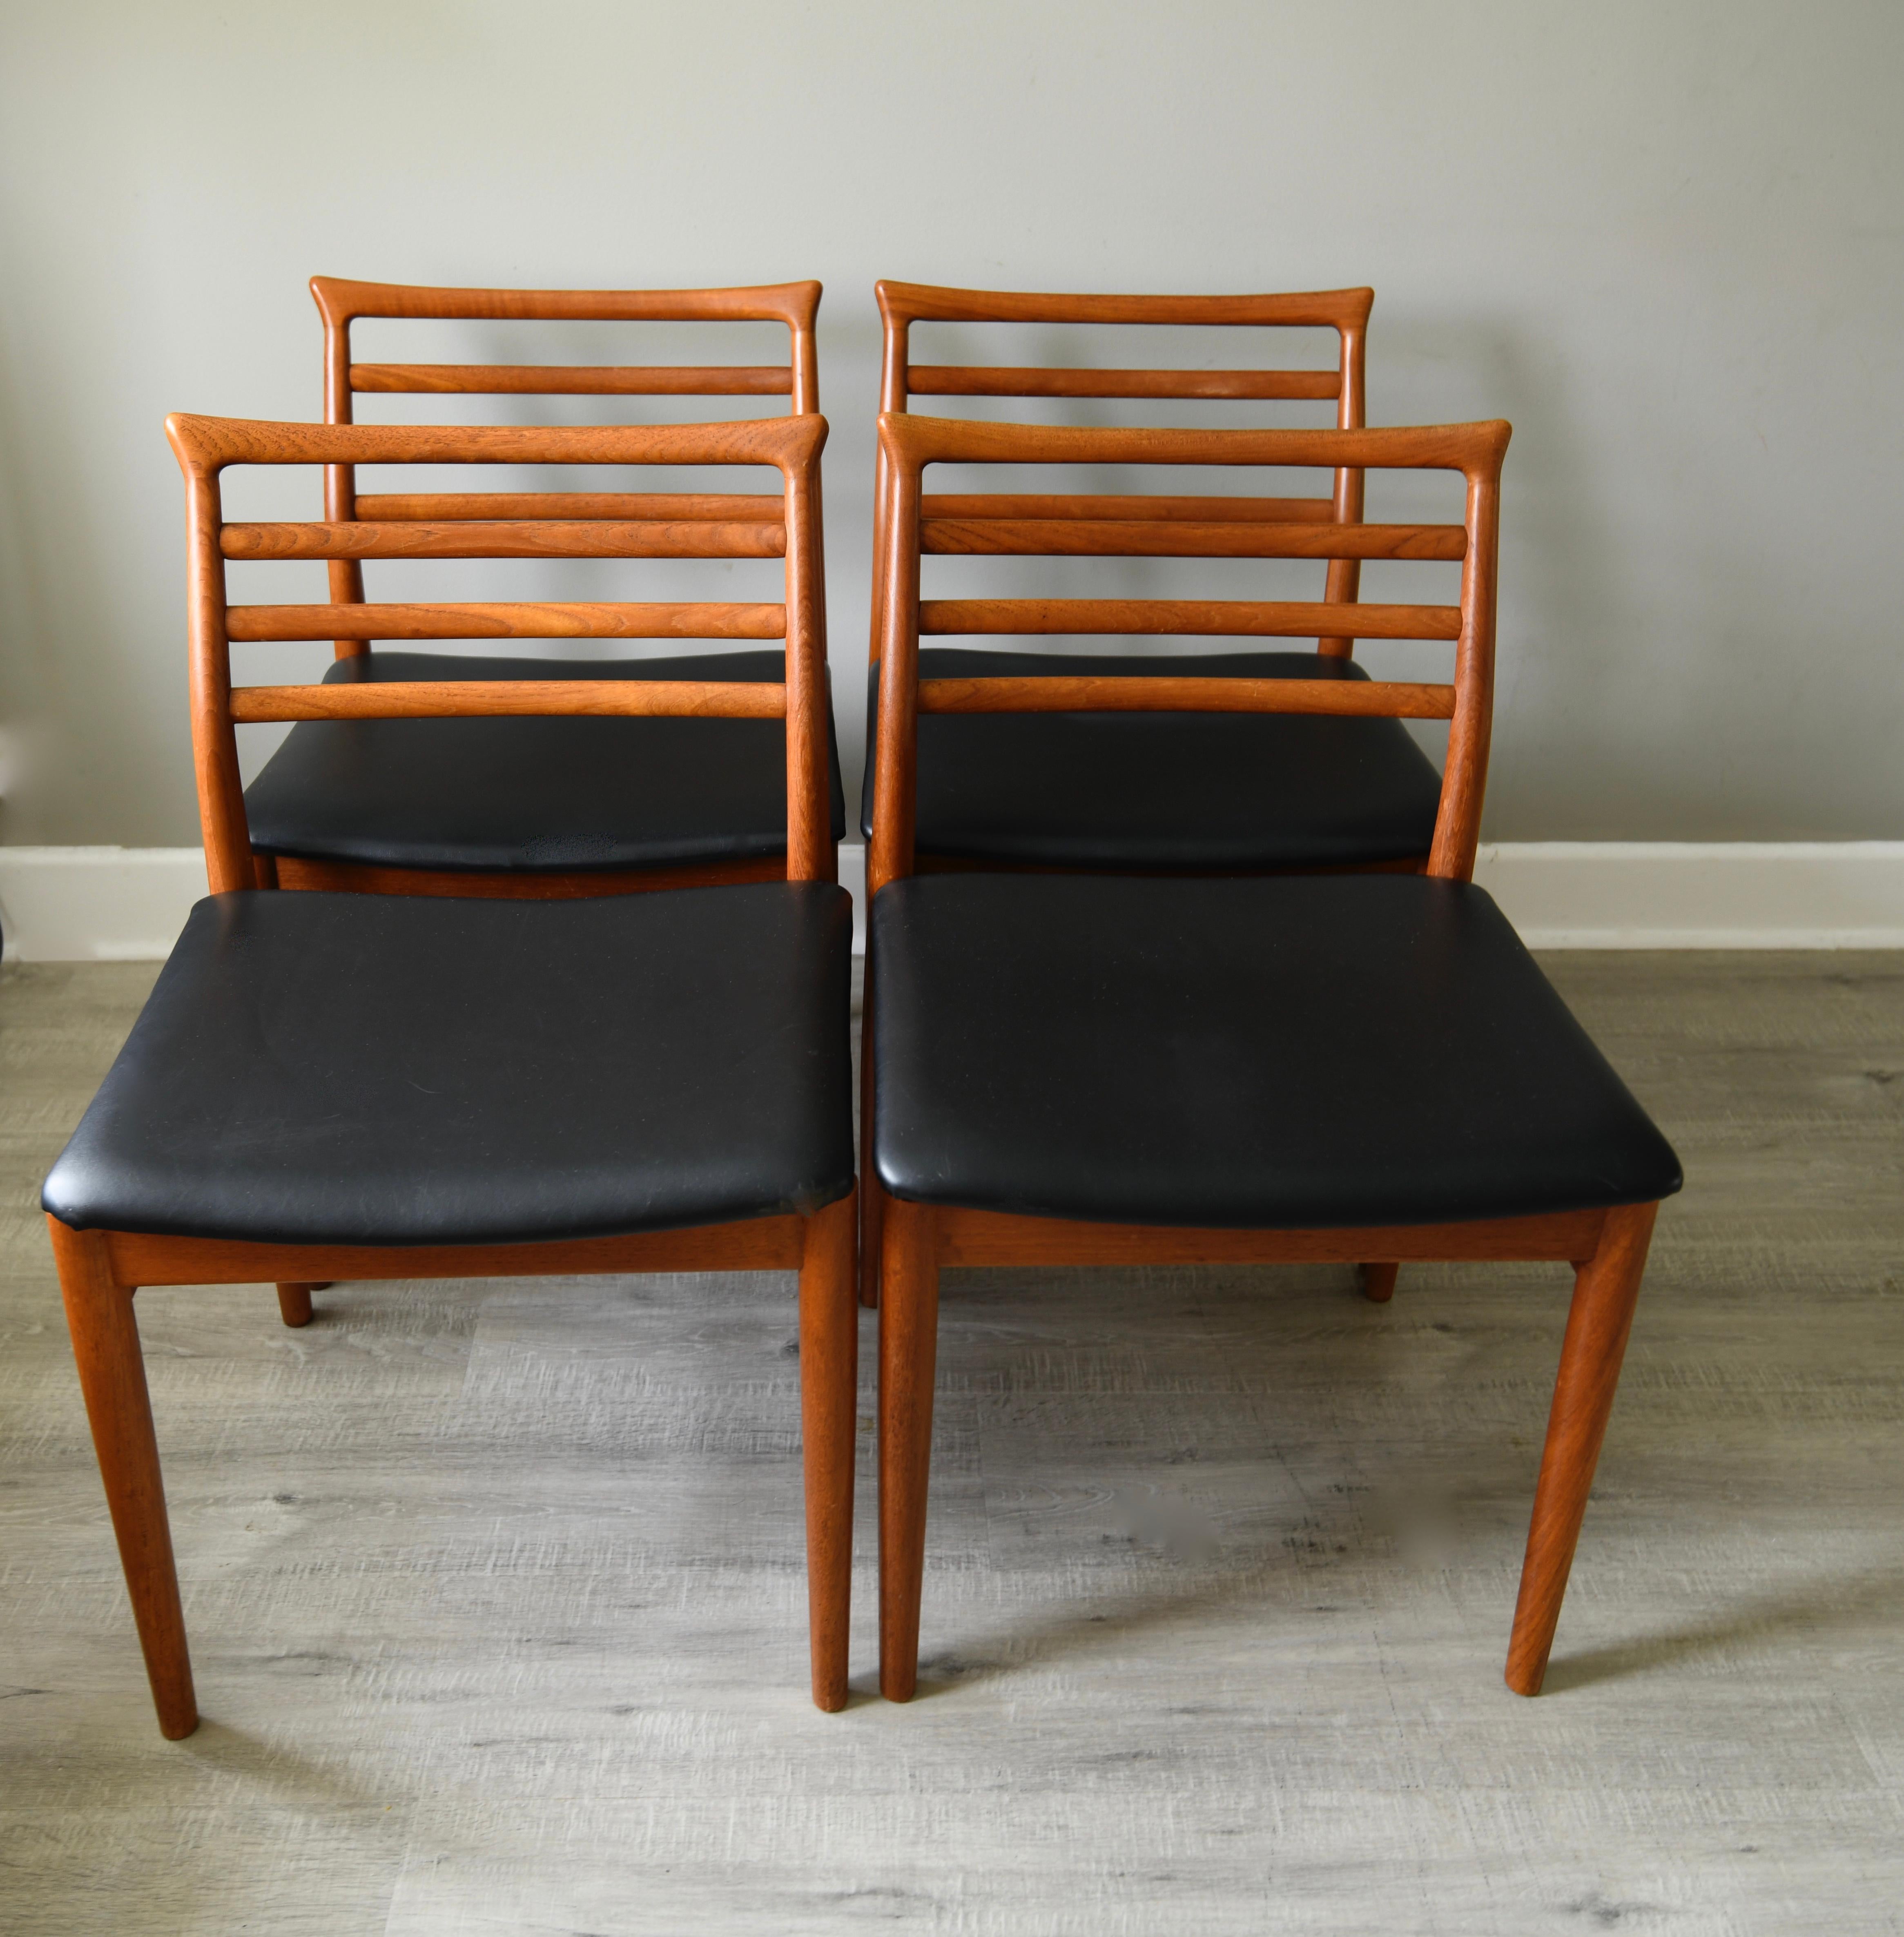 Erling Torvits Teak Dining Chairs for Sorø Stolefabrik, 1960s For Sale 1